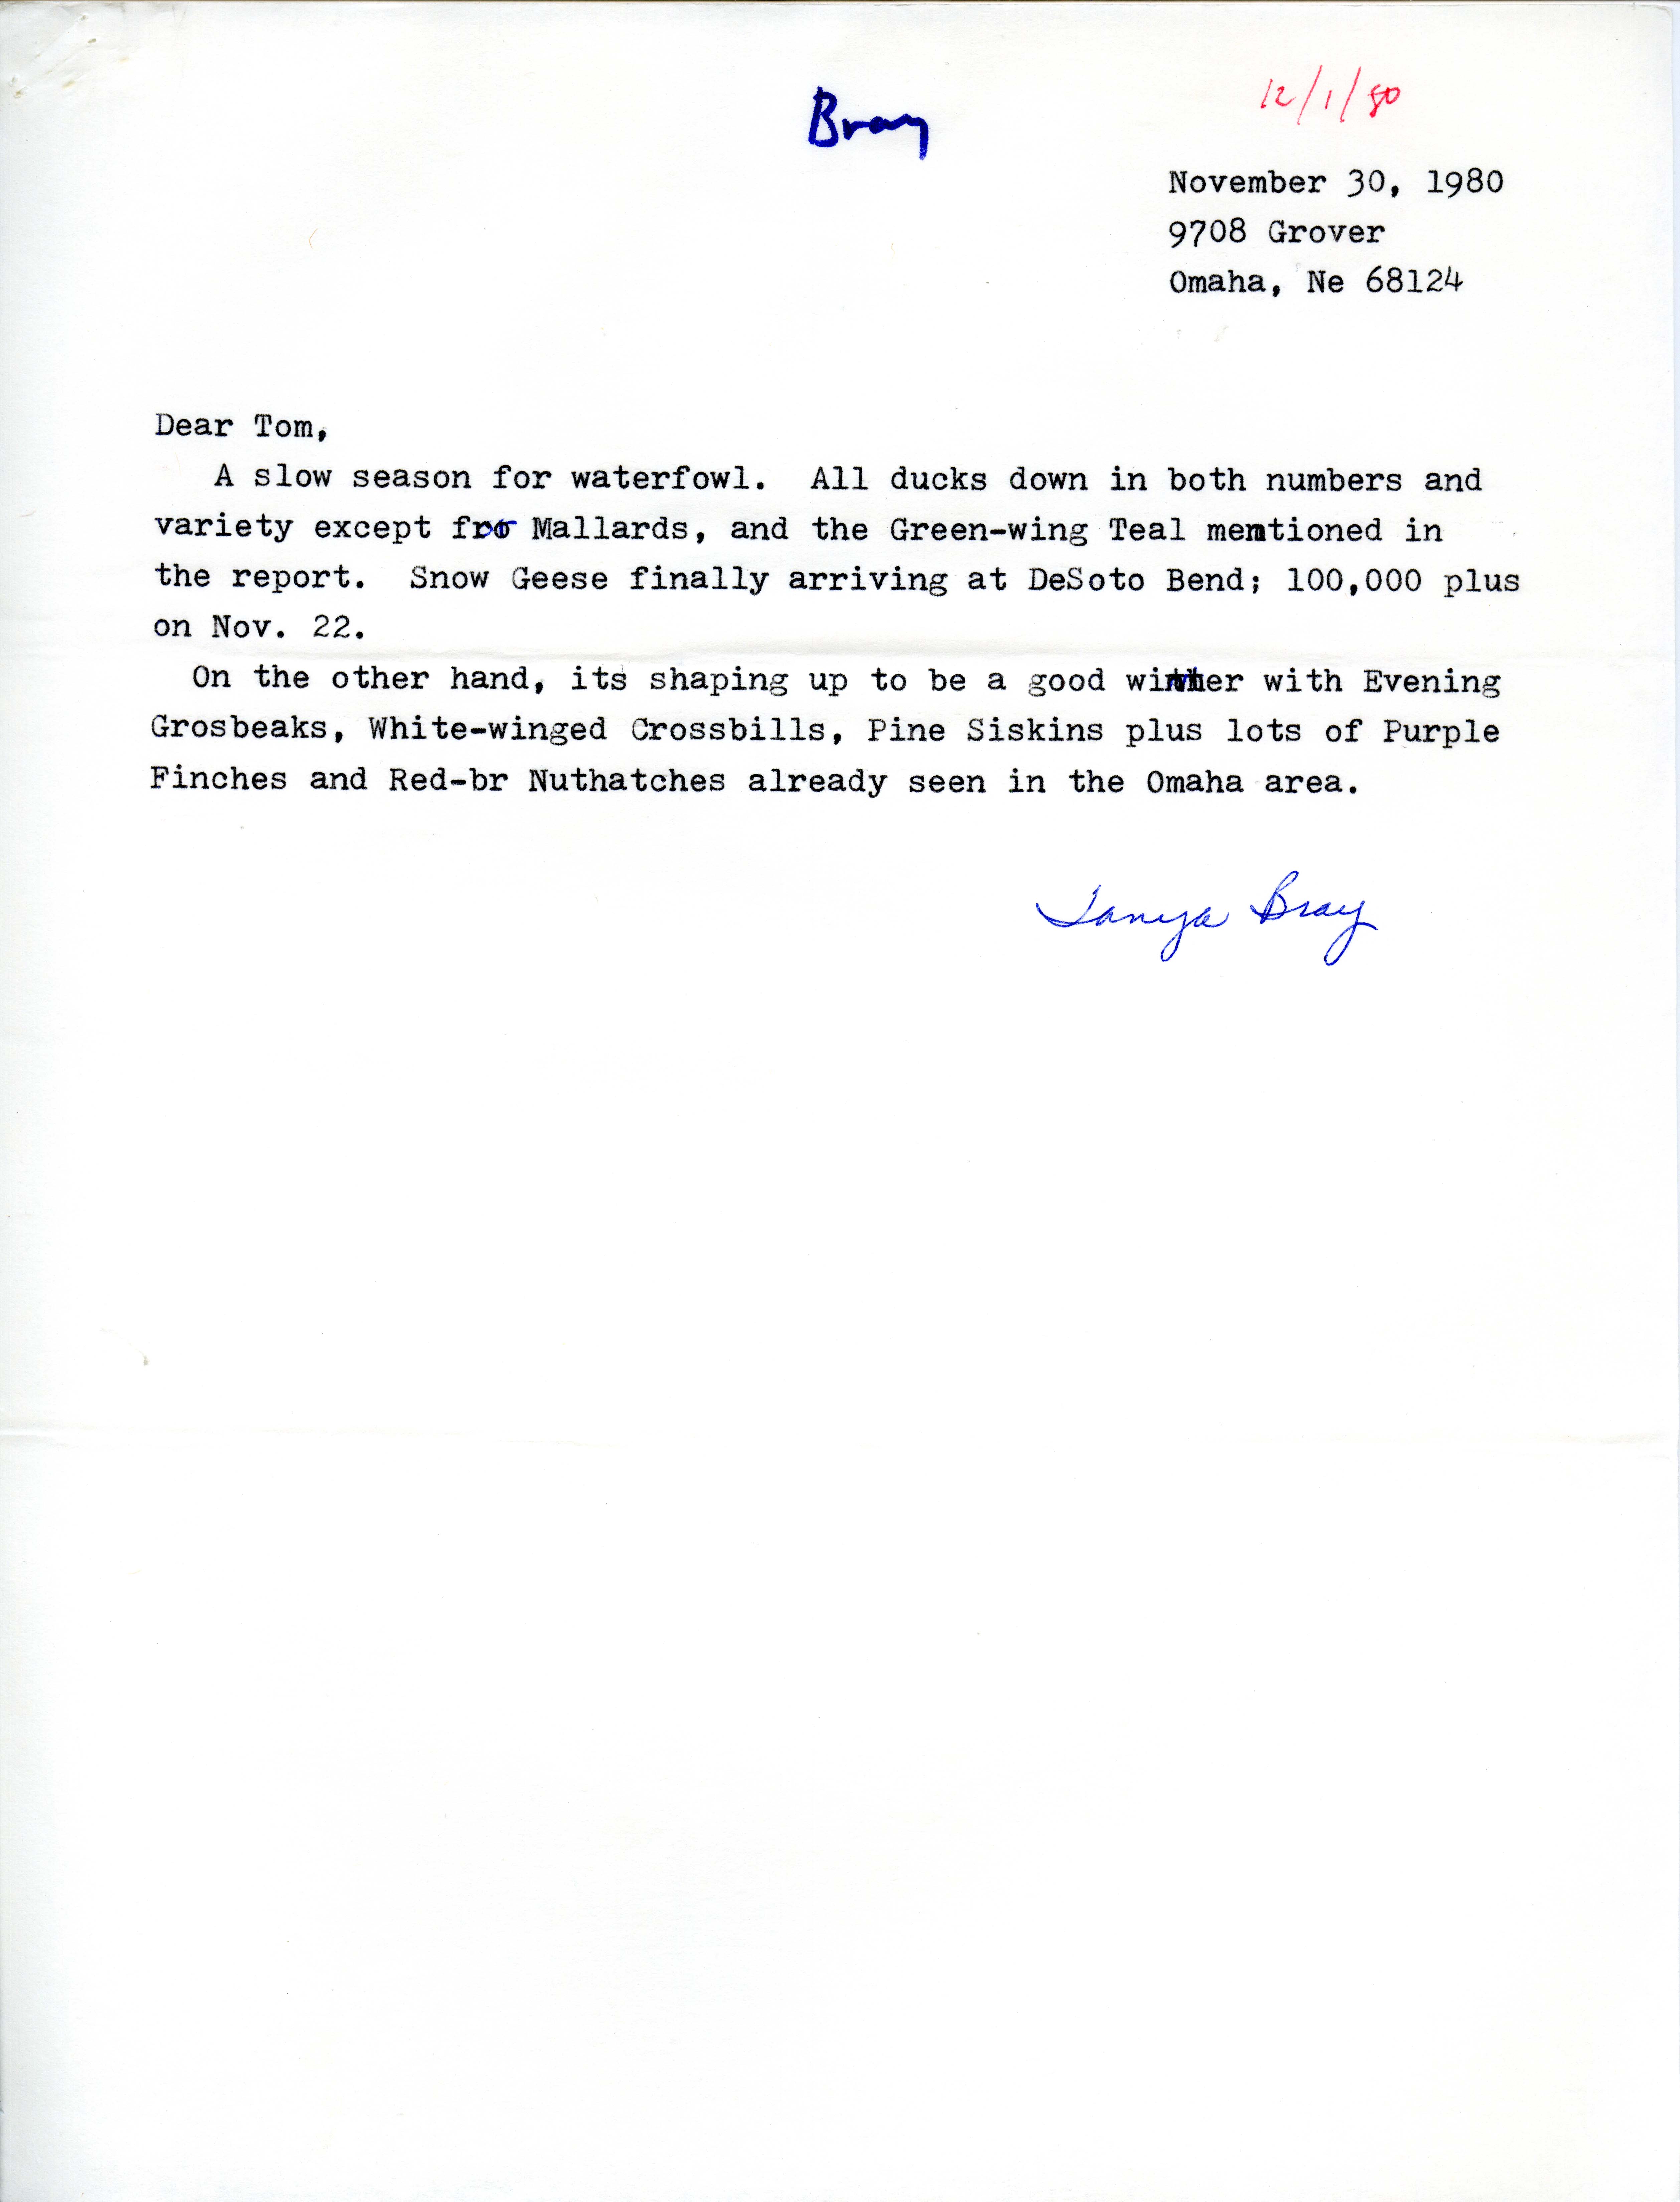 Tanya Bray letter to Thomas Kent regarding birds seen around the DeSoto Bend area, November 30, 1980